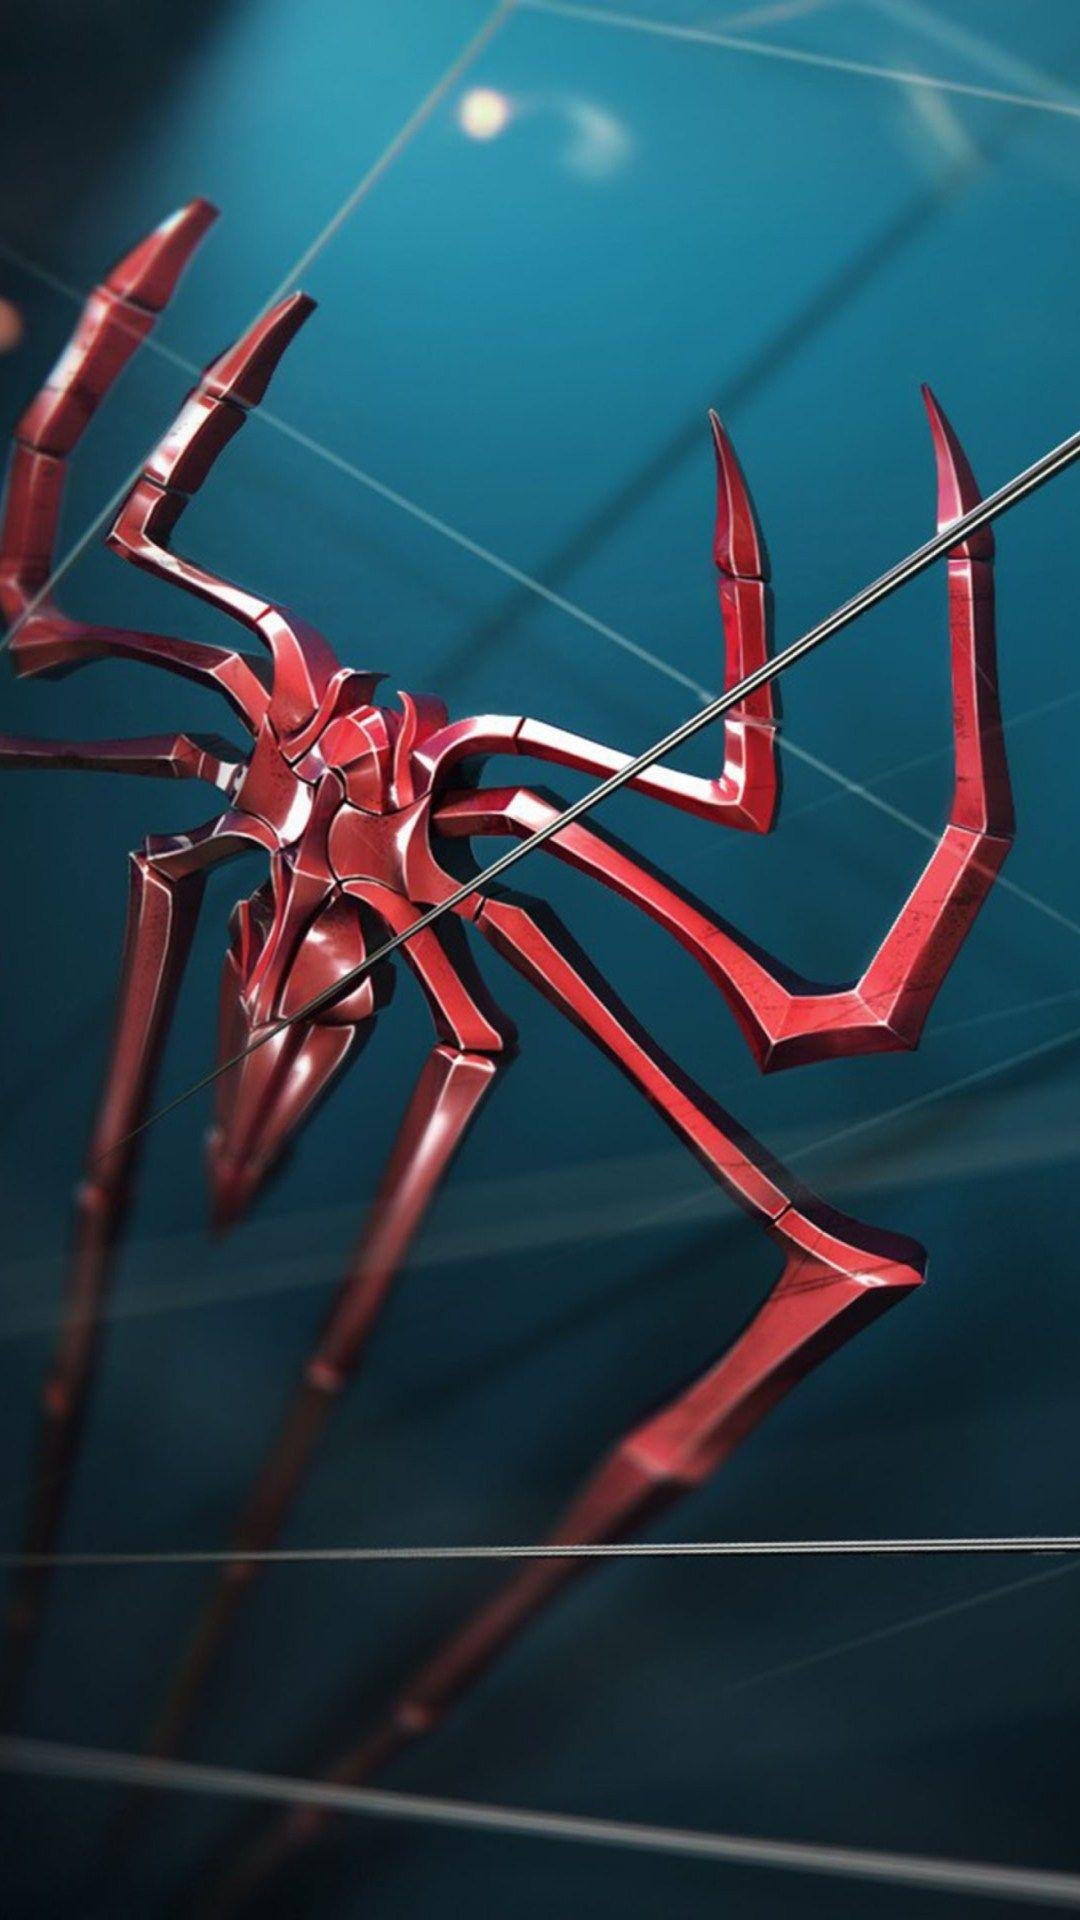 Spider Man Logo Wallpapers  Top 25 Best Spider Man Logo Wallpapers Download